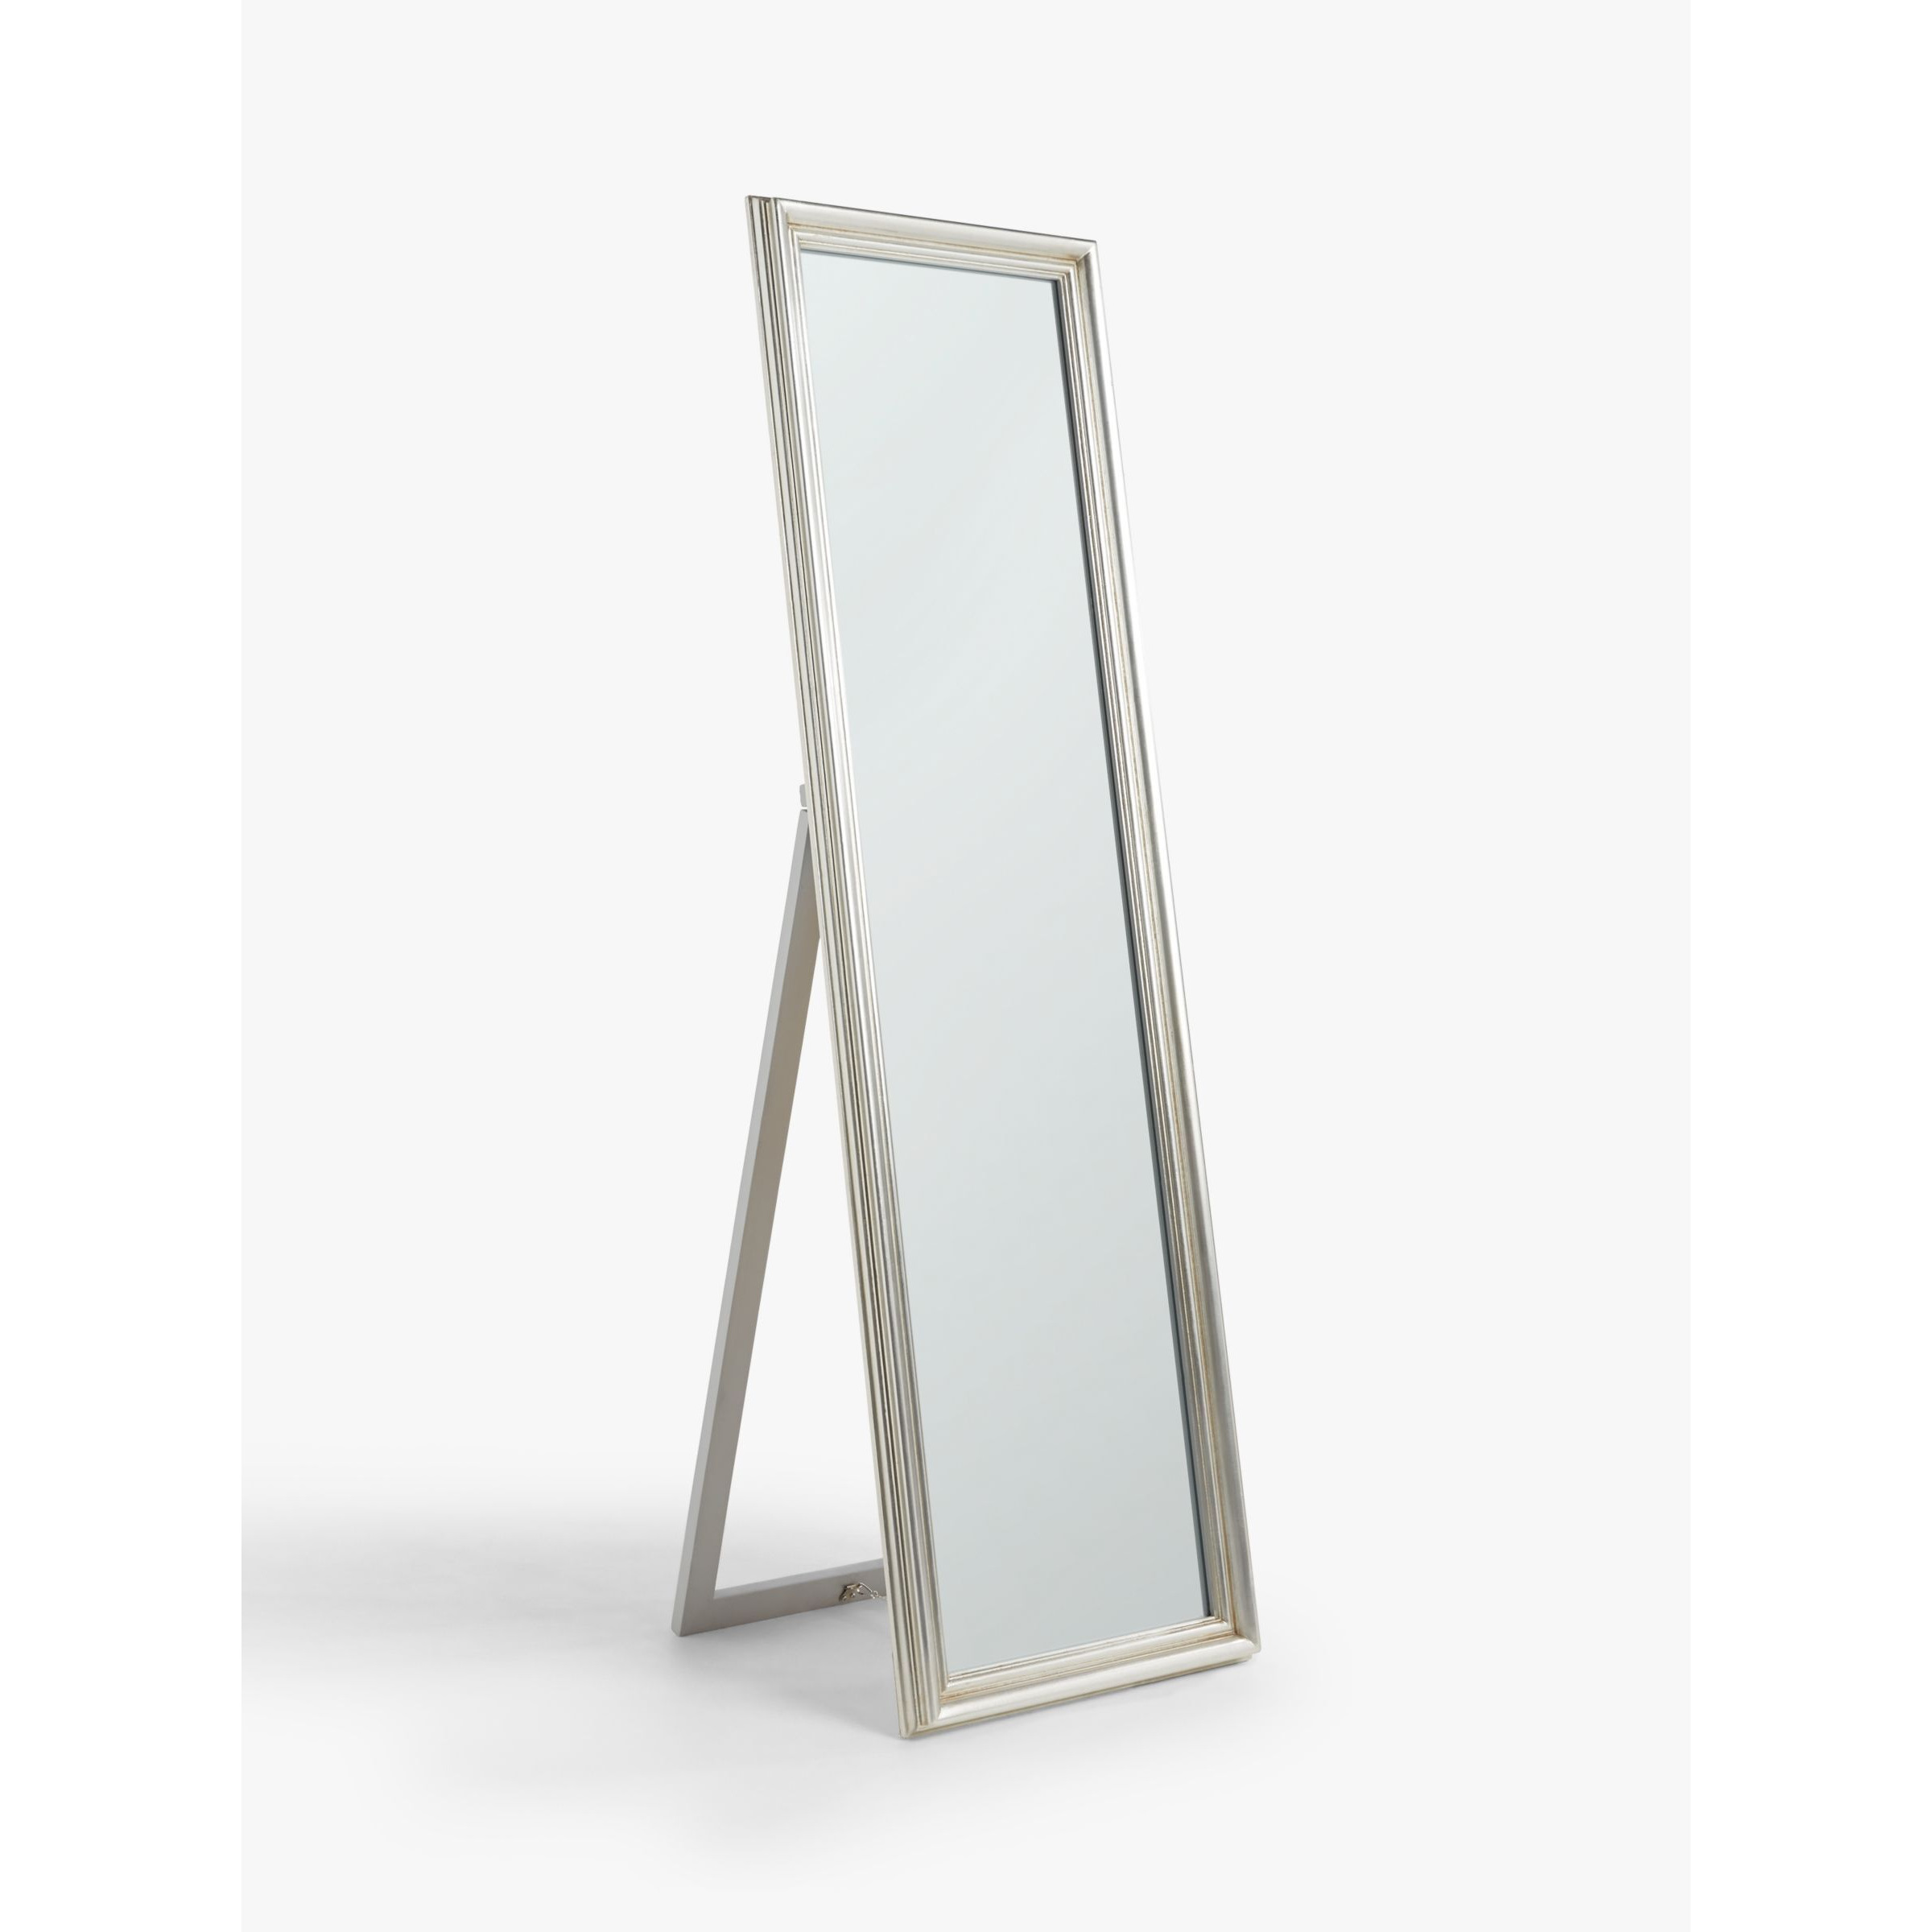 John Lewis Ribbed Wood Frame Cheval Mirror, 170 x 50cm, Silver - image 1